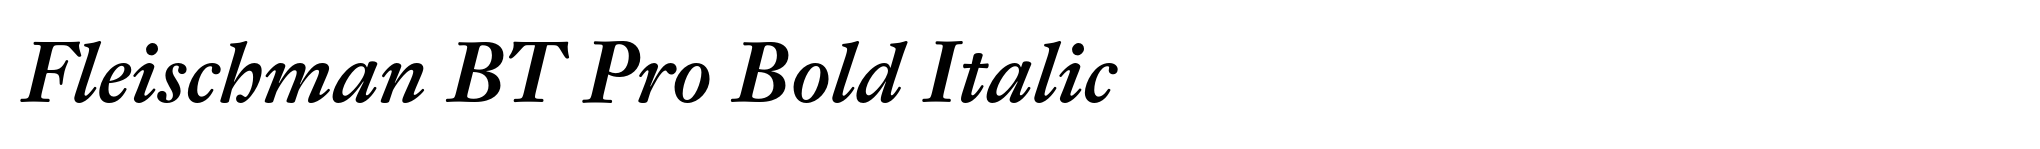 Fleischman BT Pro Bold Italic image